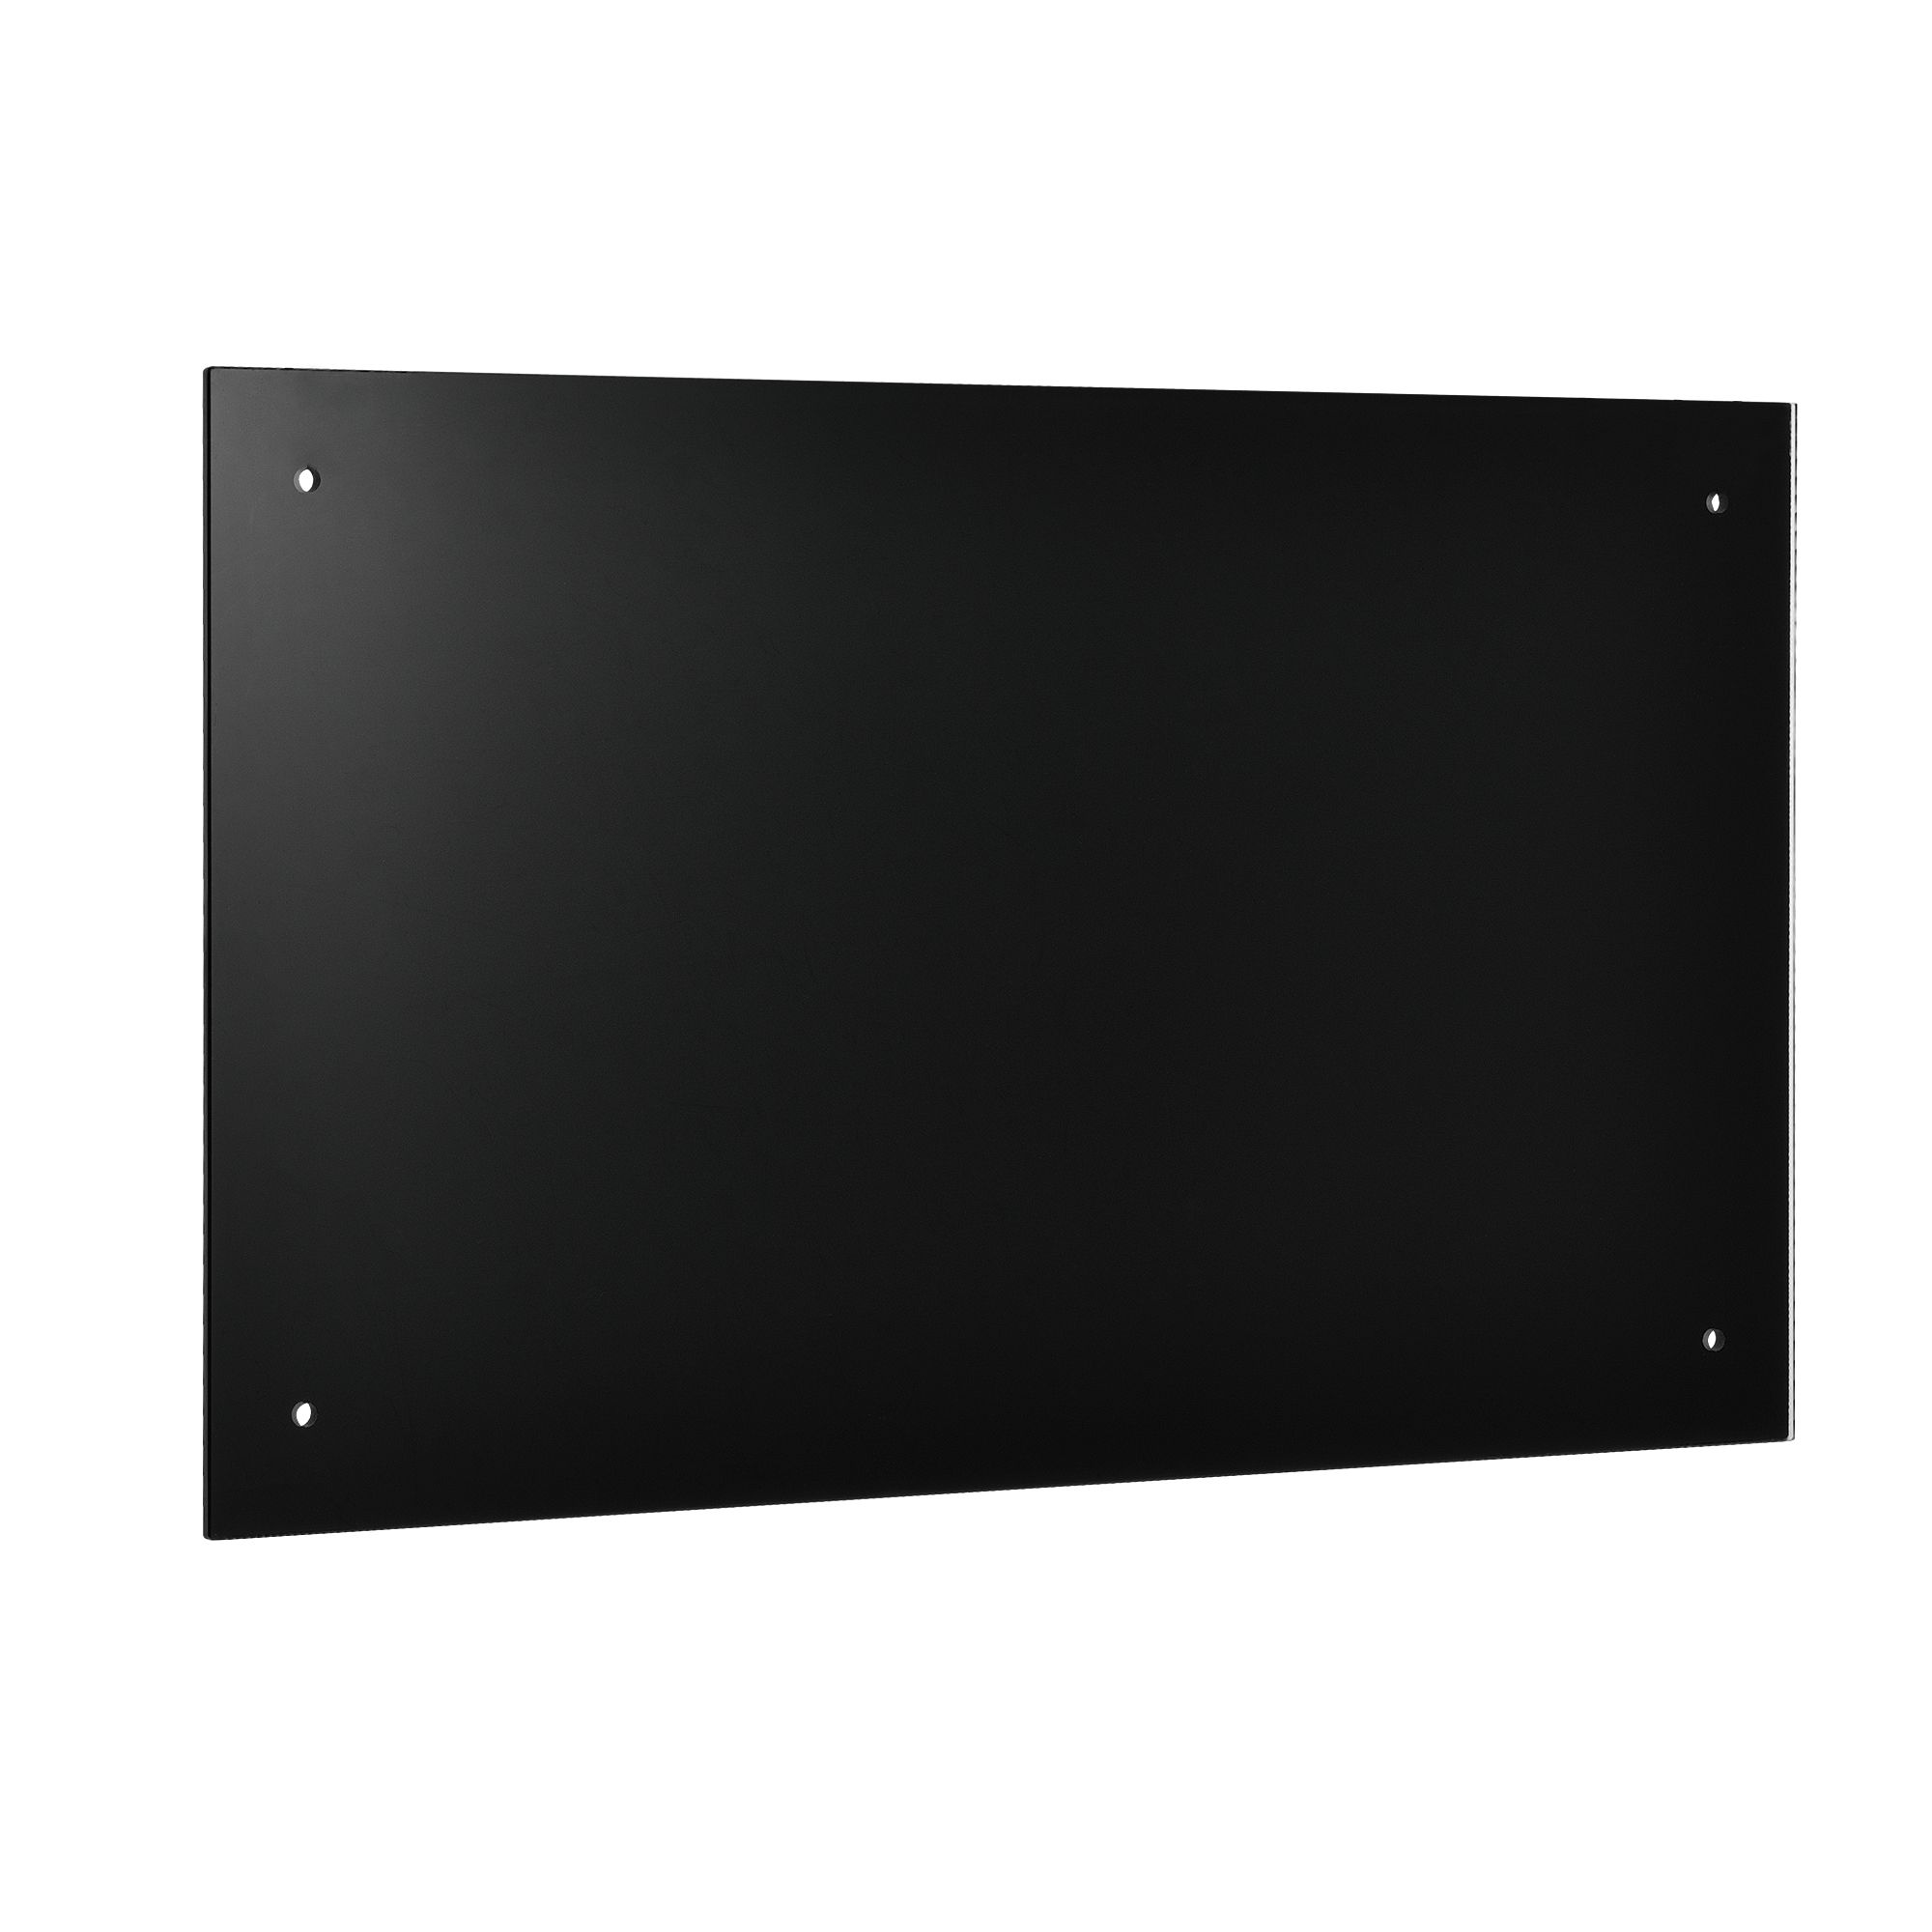 [neu.haus] Skleněný panel HTKG-4925 černý 70x40 cm - H.T. Trade Service GmbH & Co. KG